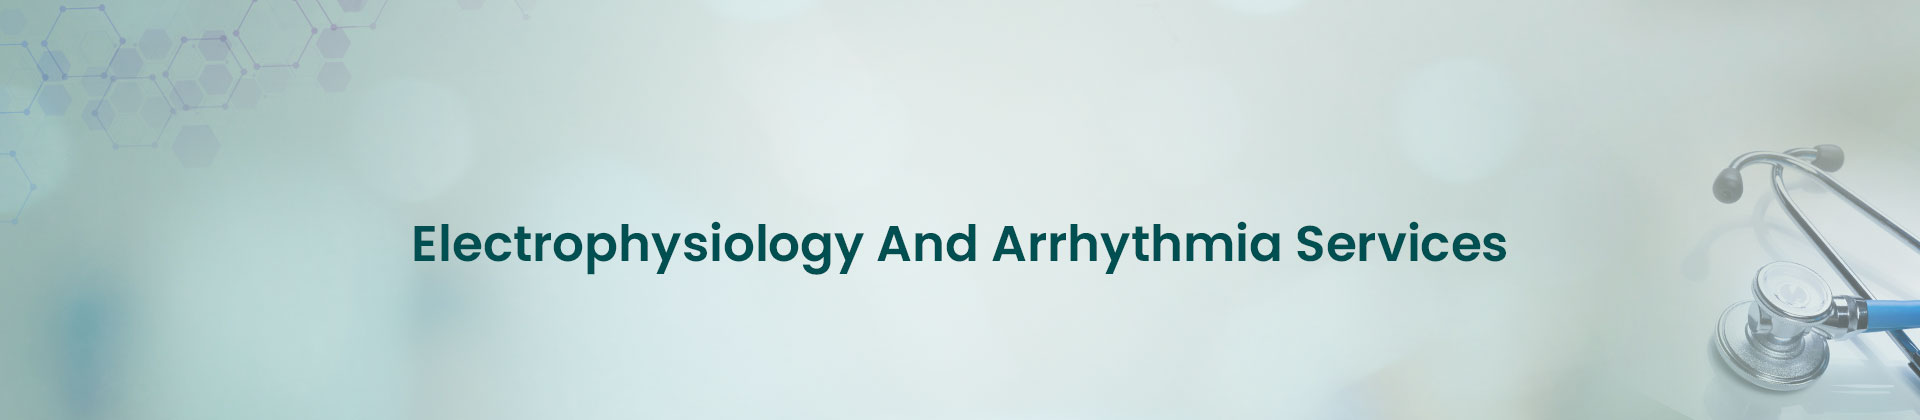 Electrophysiology And Arrhythmia Services